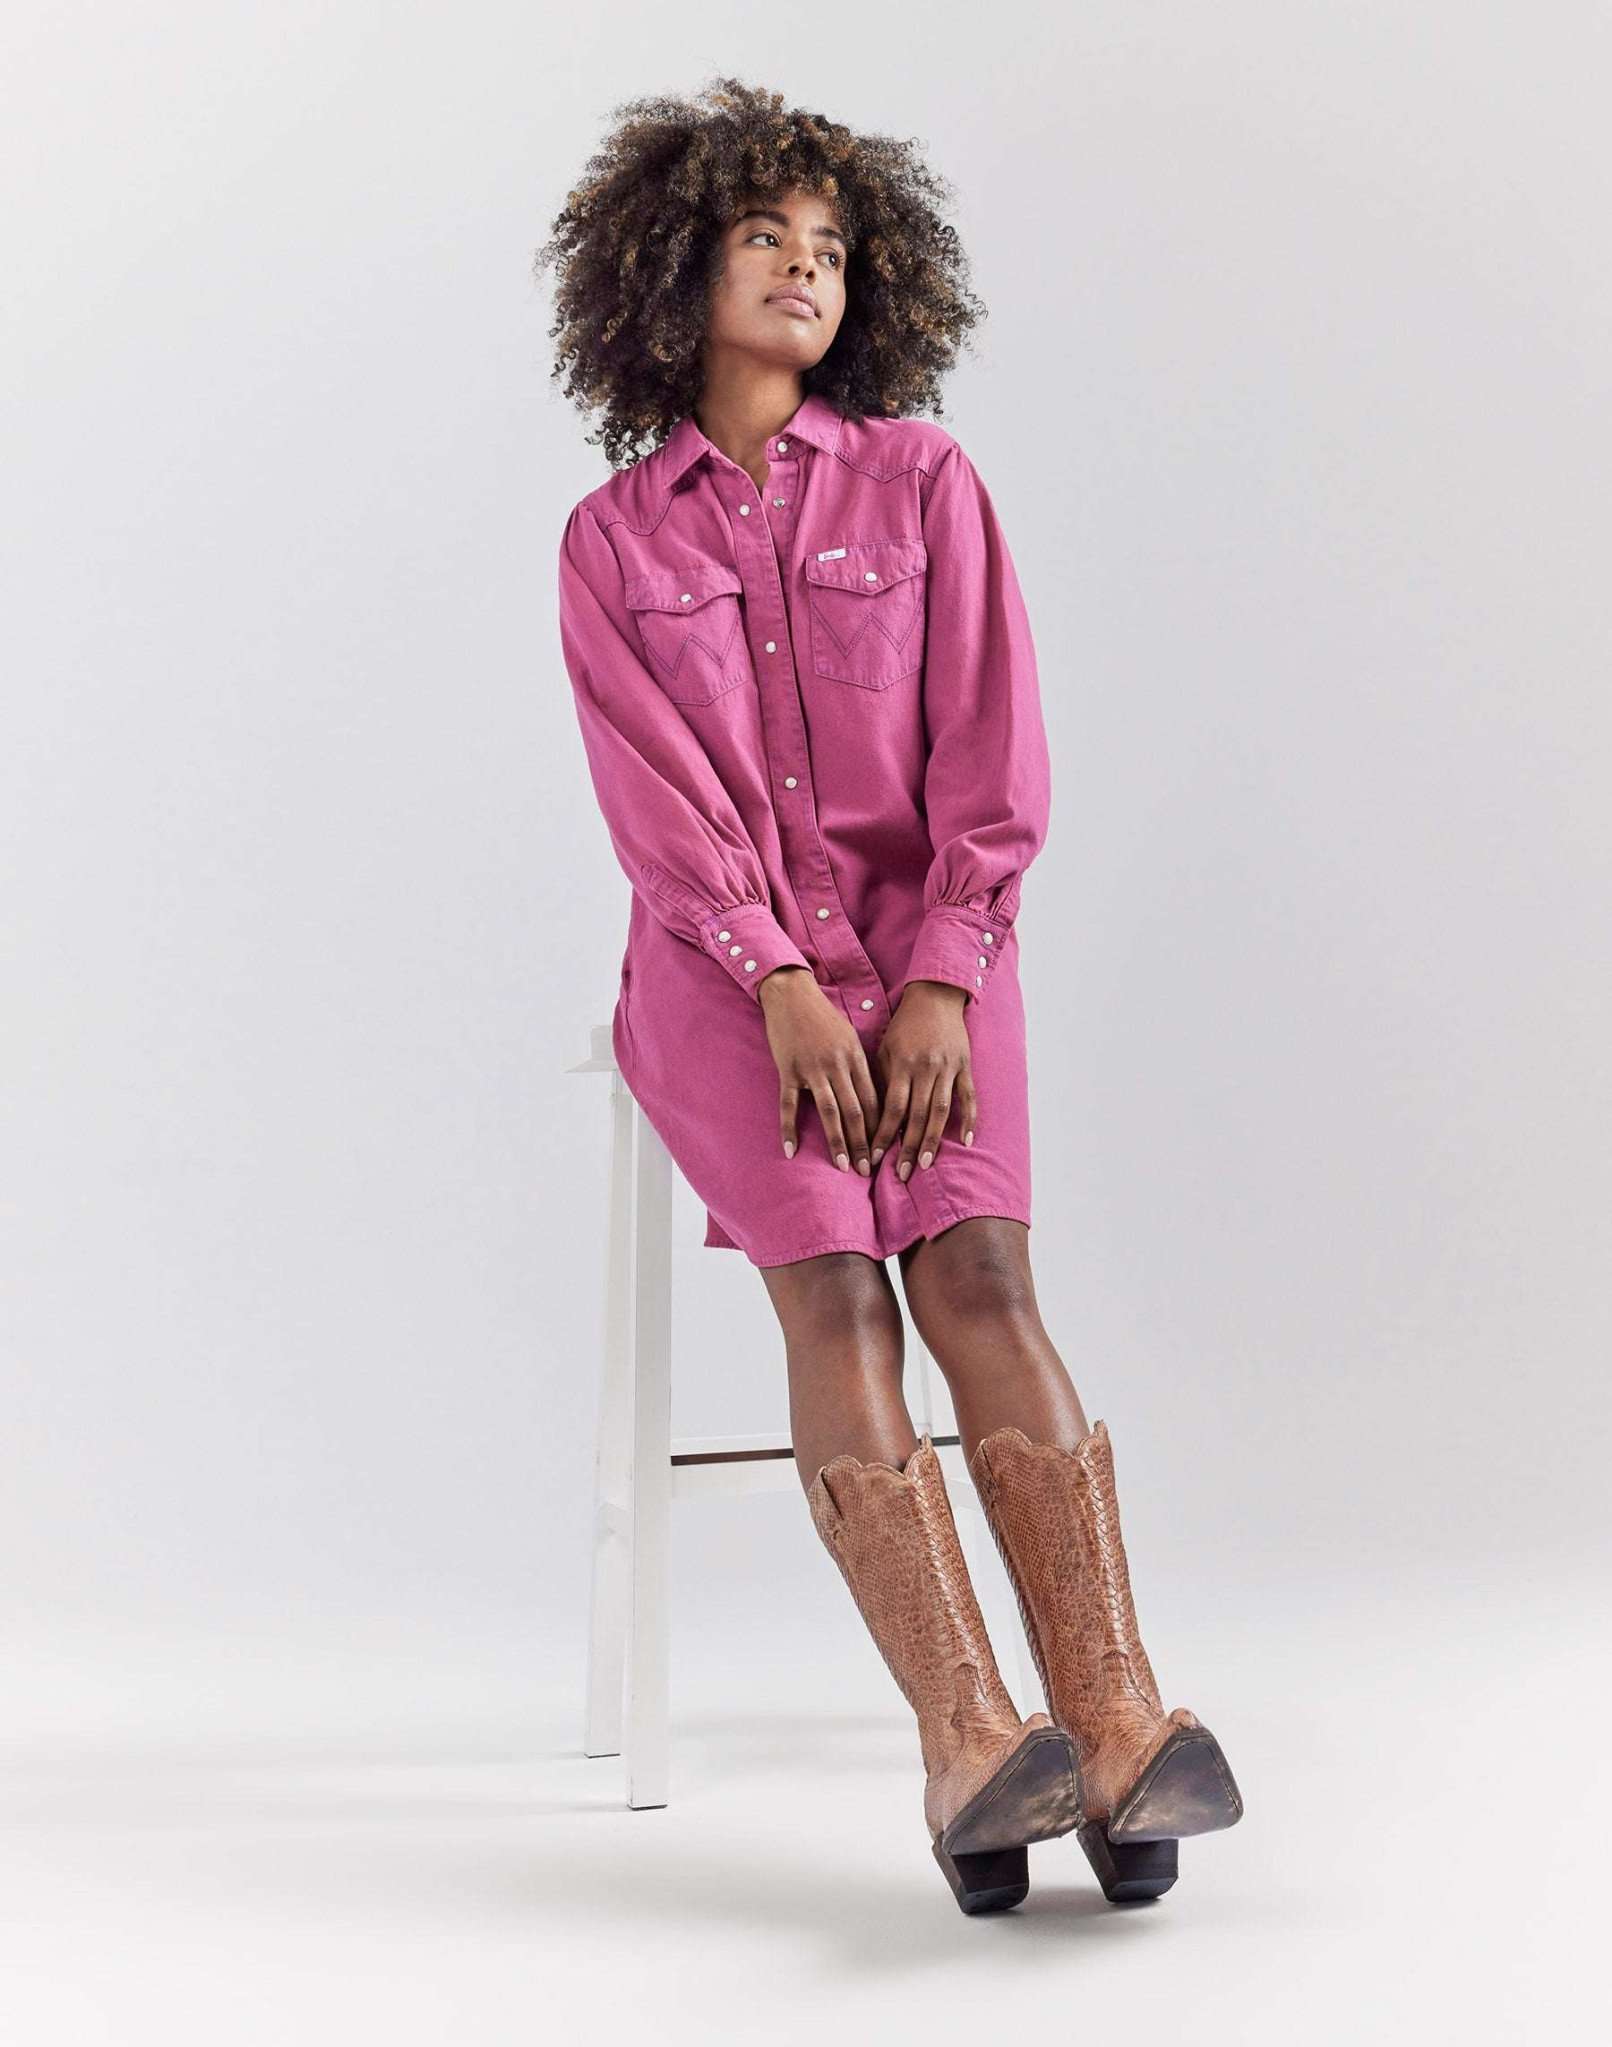 Wrangler X Barbie™ - Shirt Dress in Dreamy Pink Kleider Wrangler   